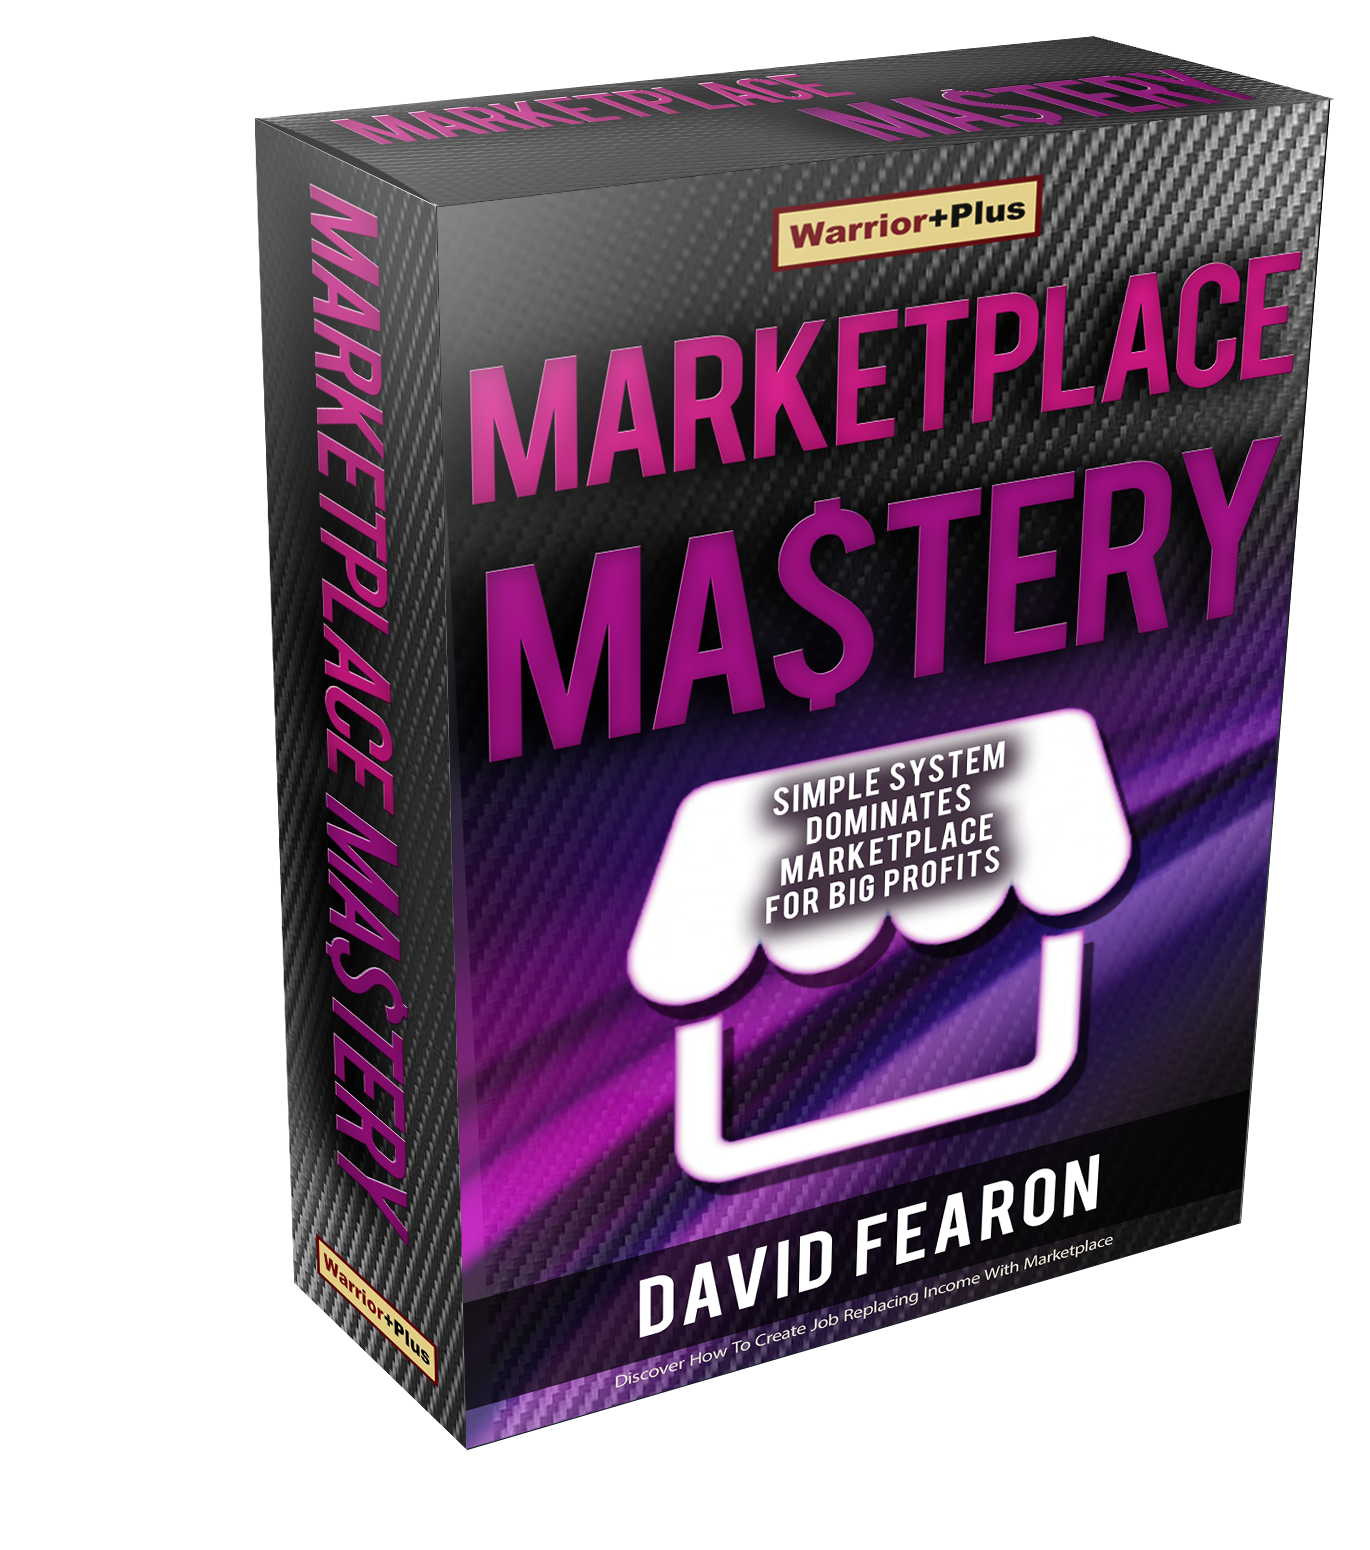 Marketplace Mastery